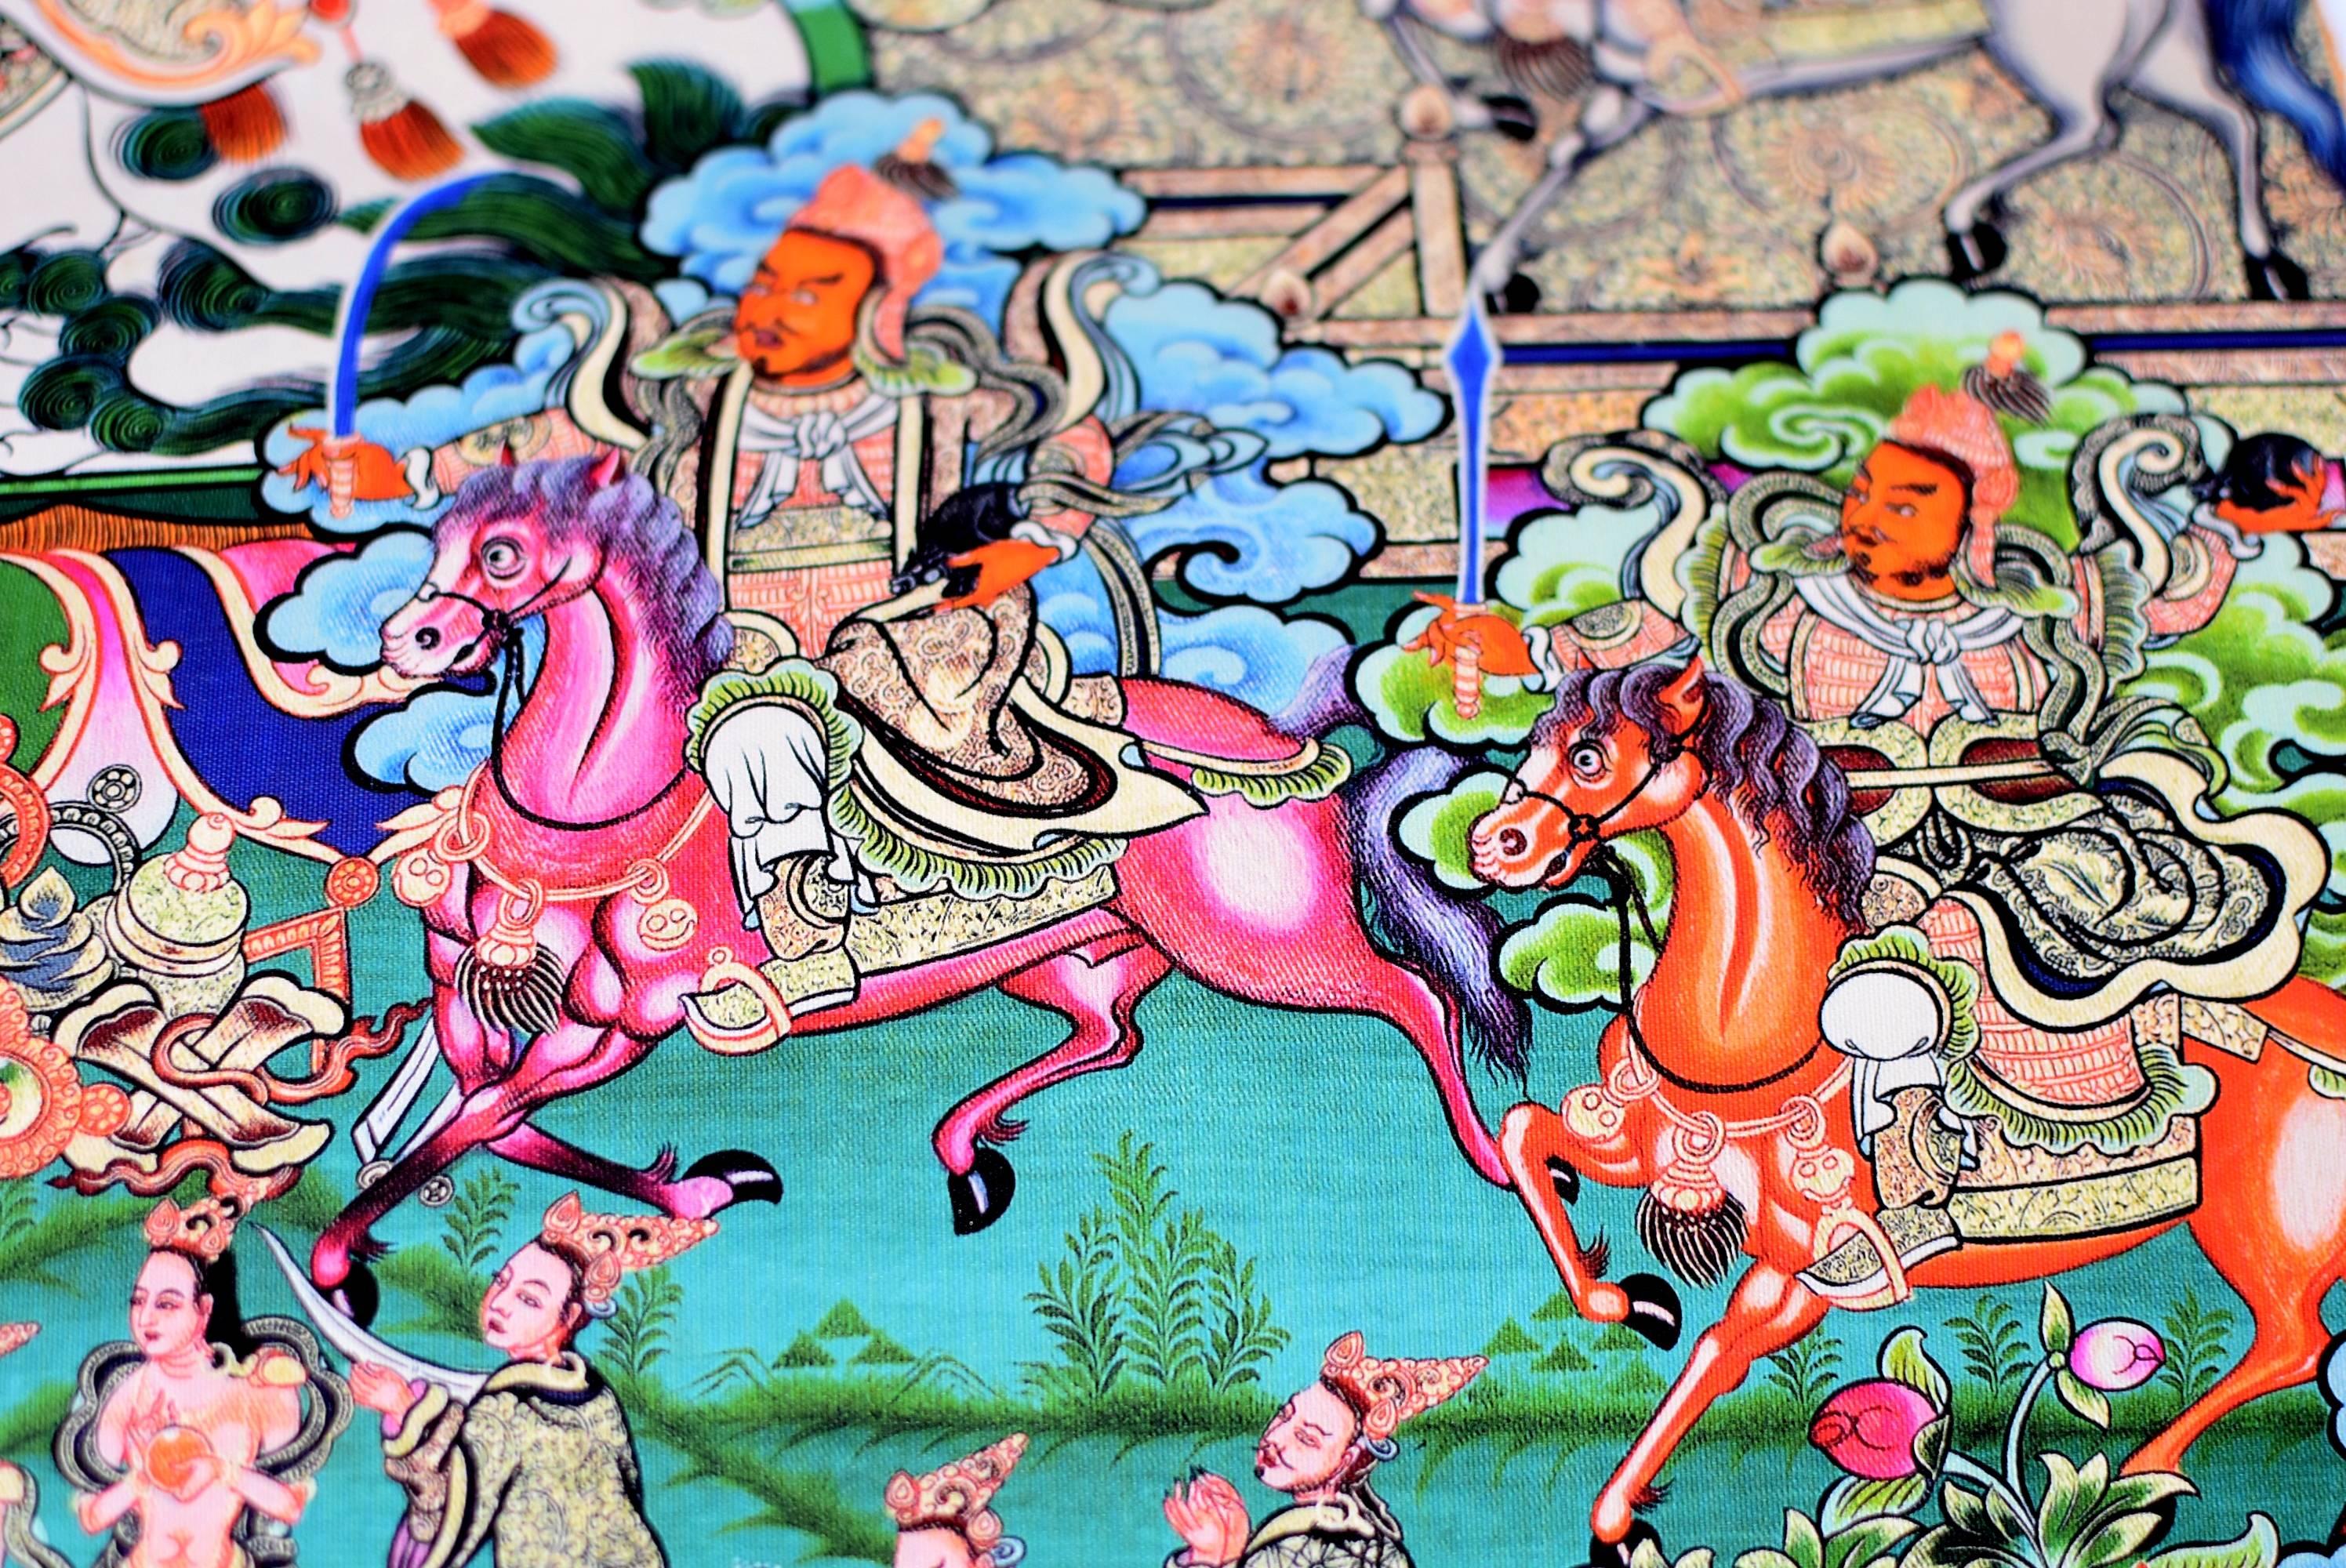 Paper Tibetan Thangka Painting Dorje Drolo, Hand-Painted Thanka